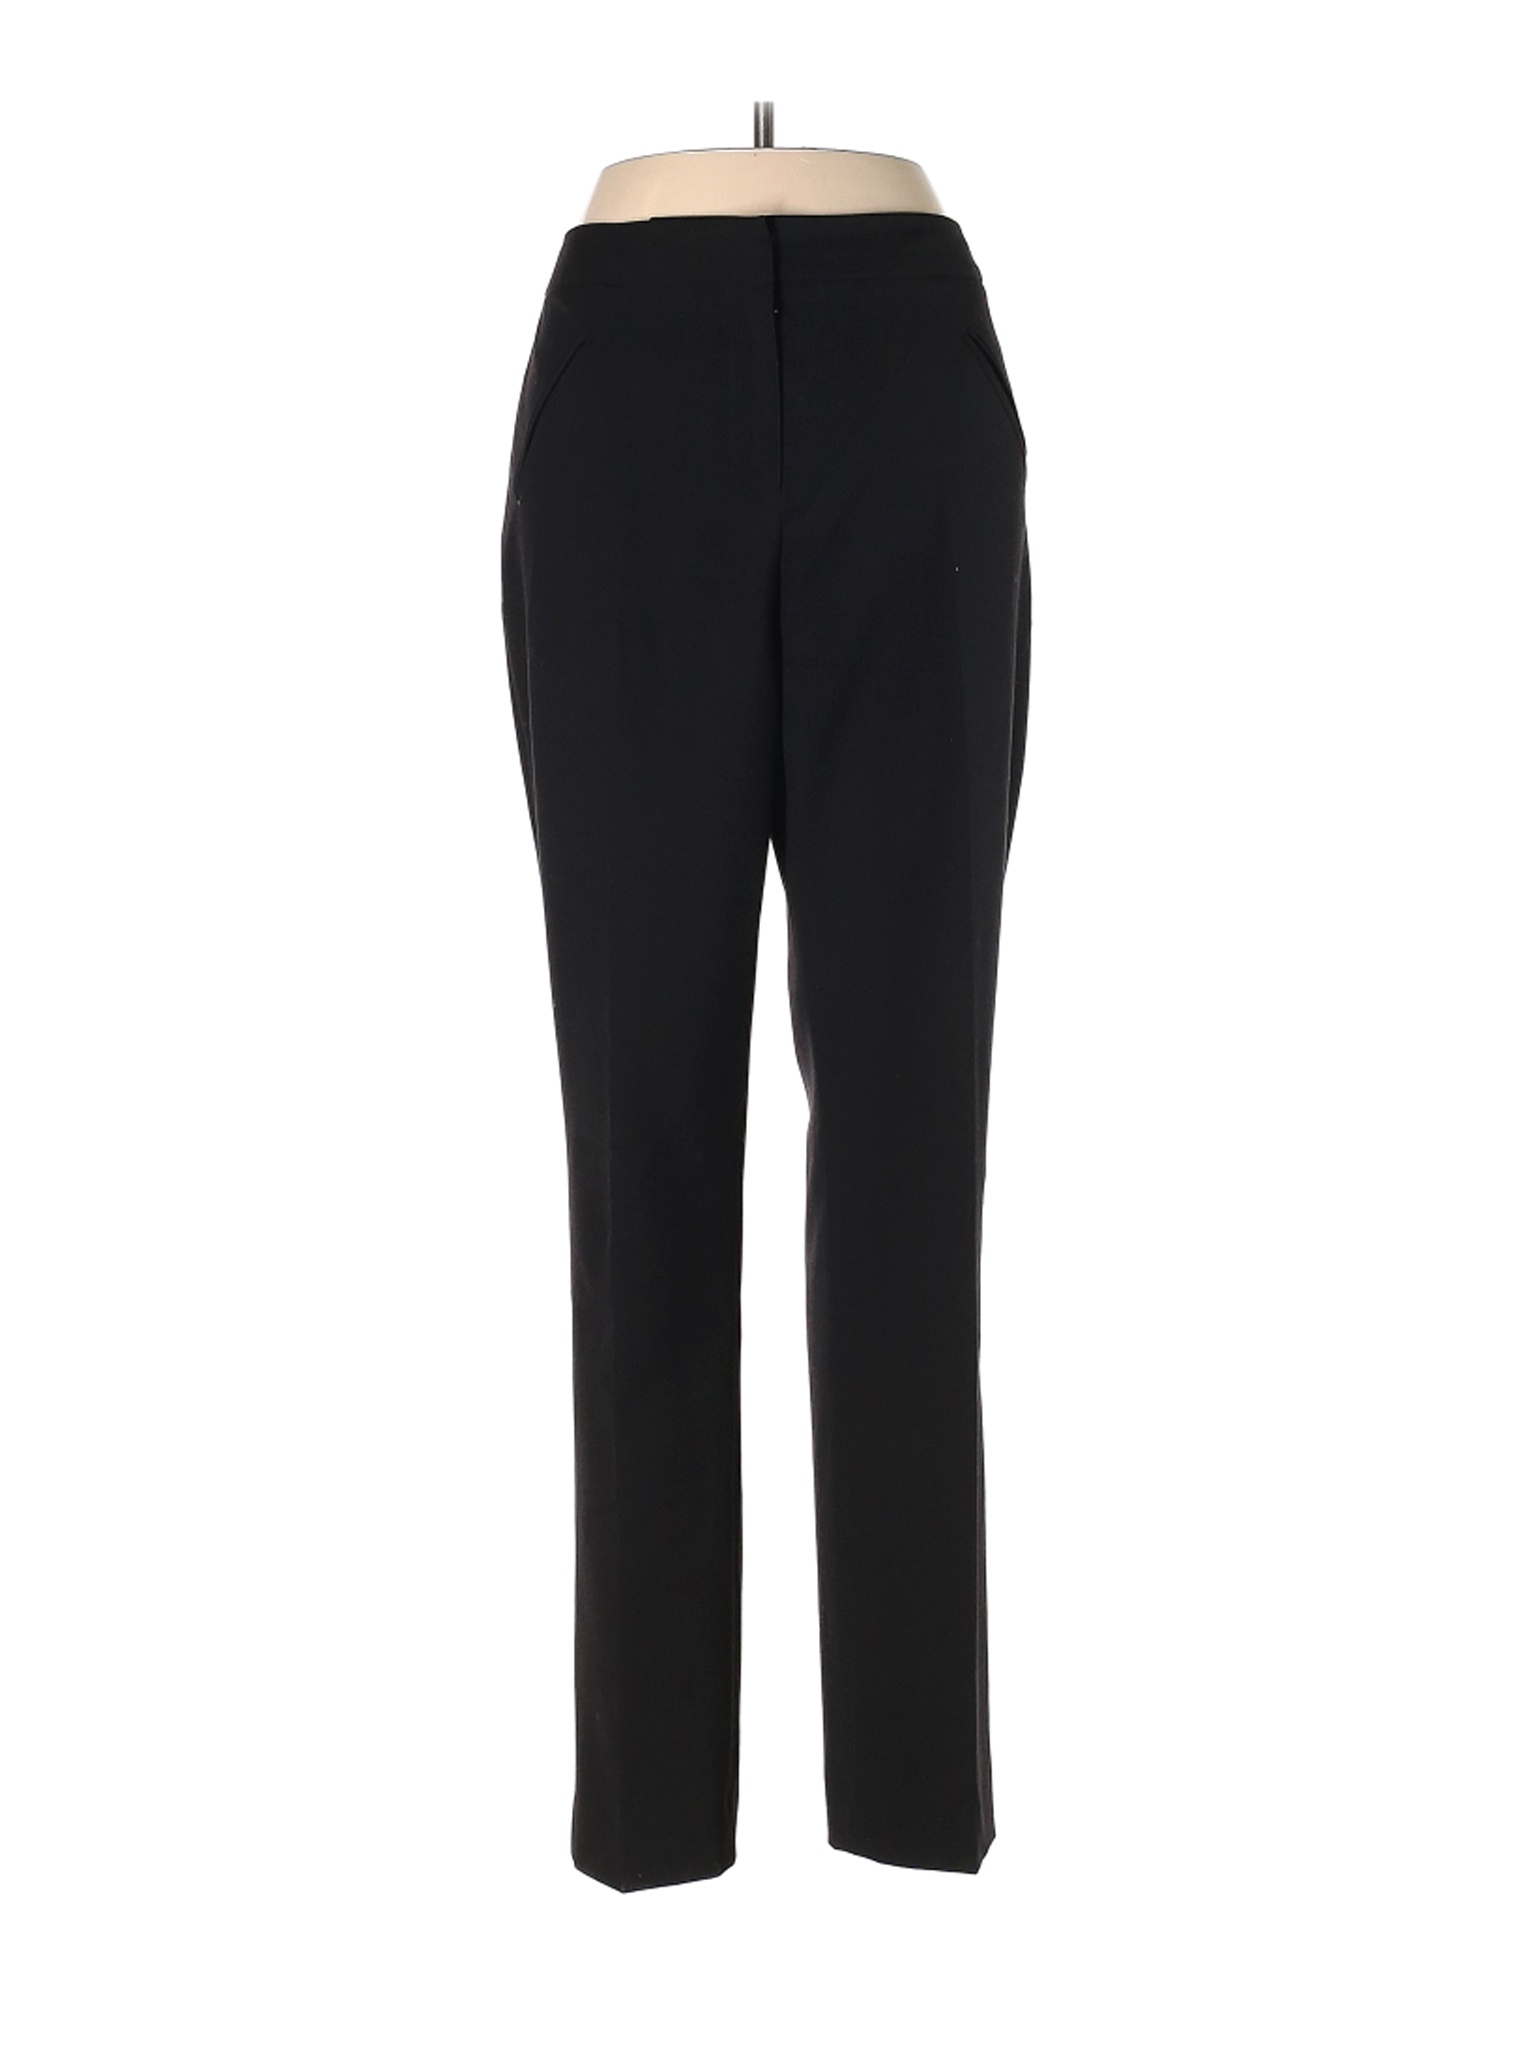 Tahari Women Black Dress Pants 8 | eBay